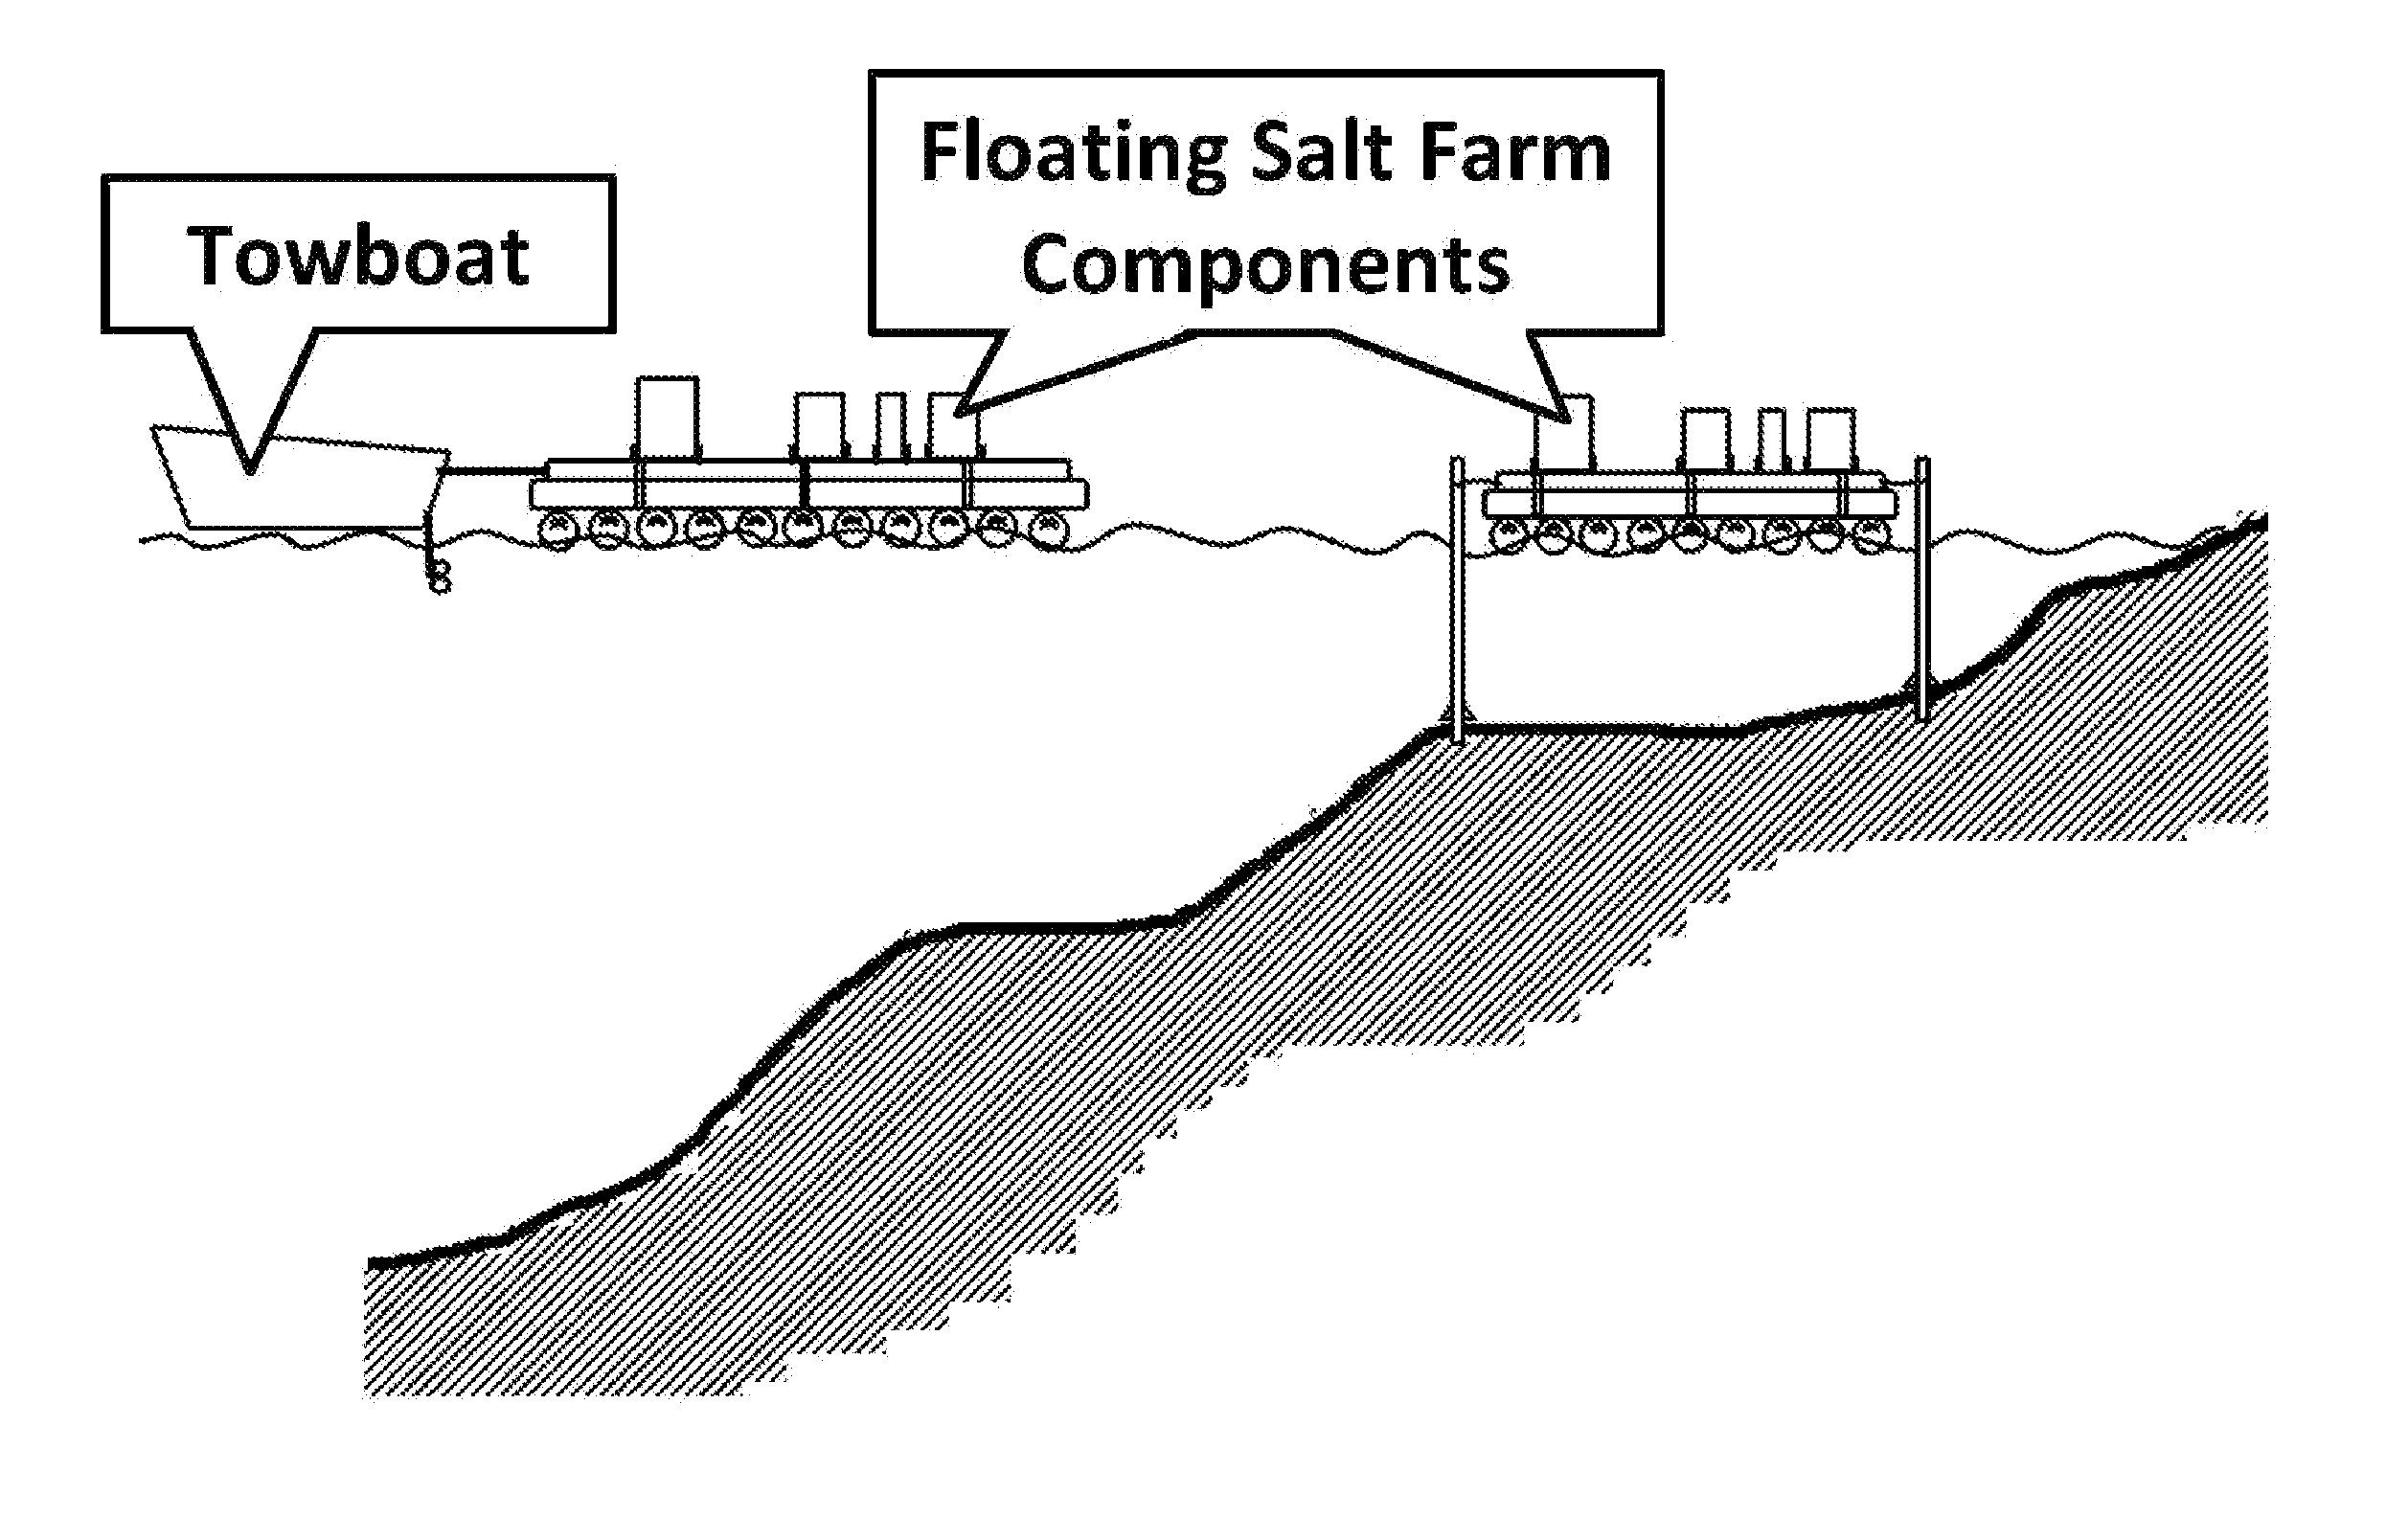 Floating salt farm